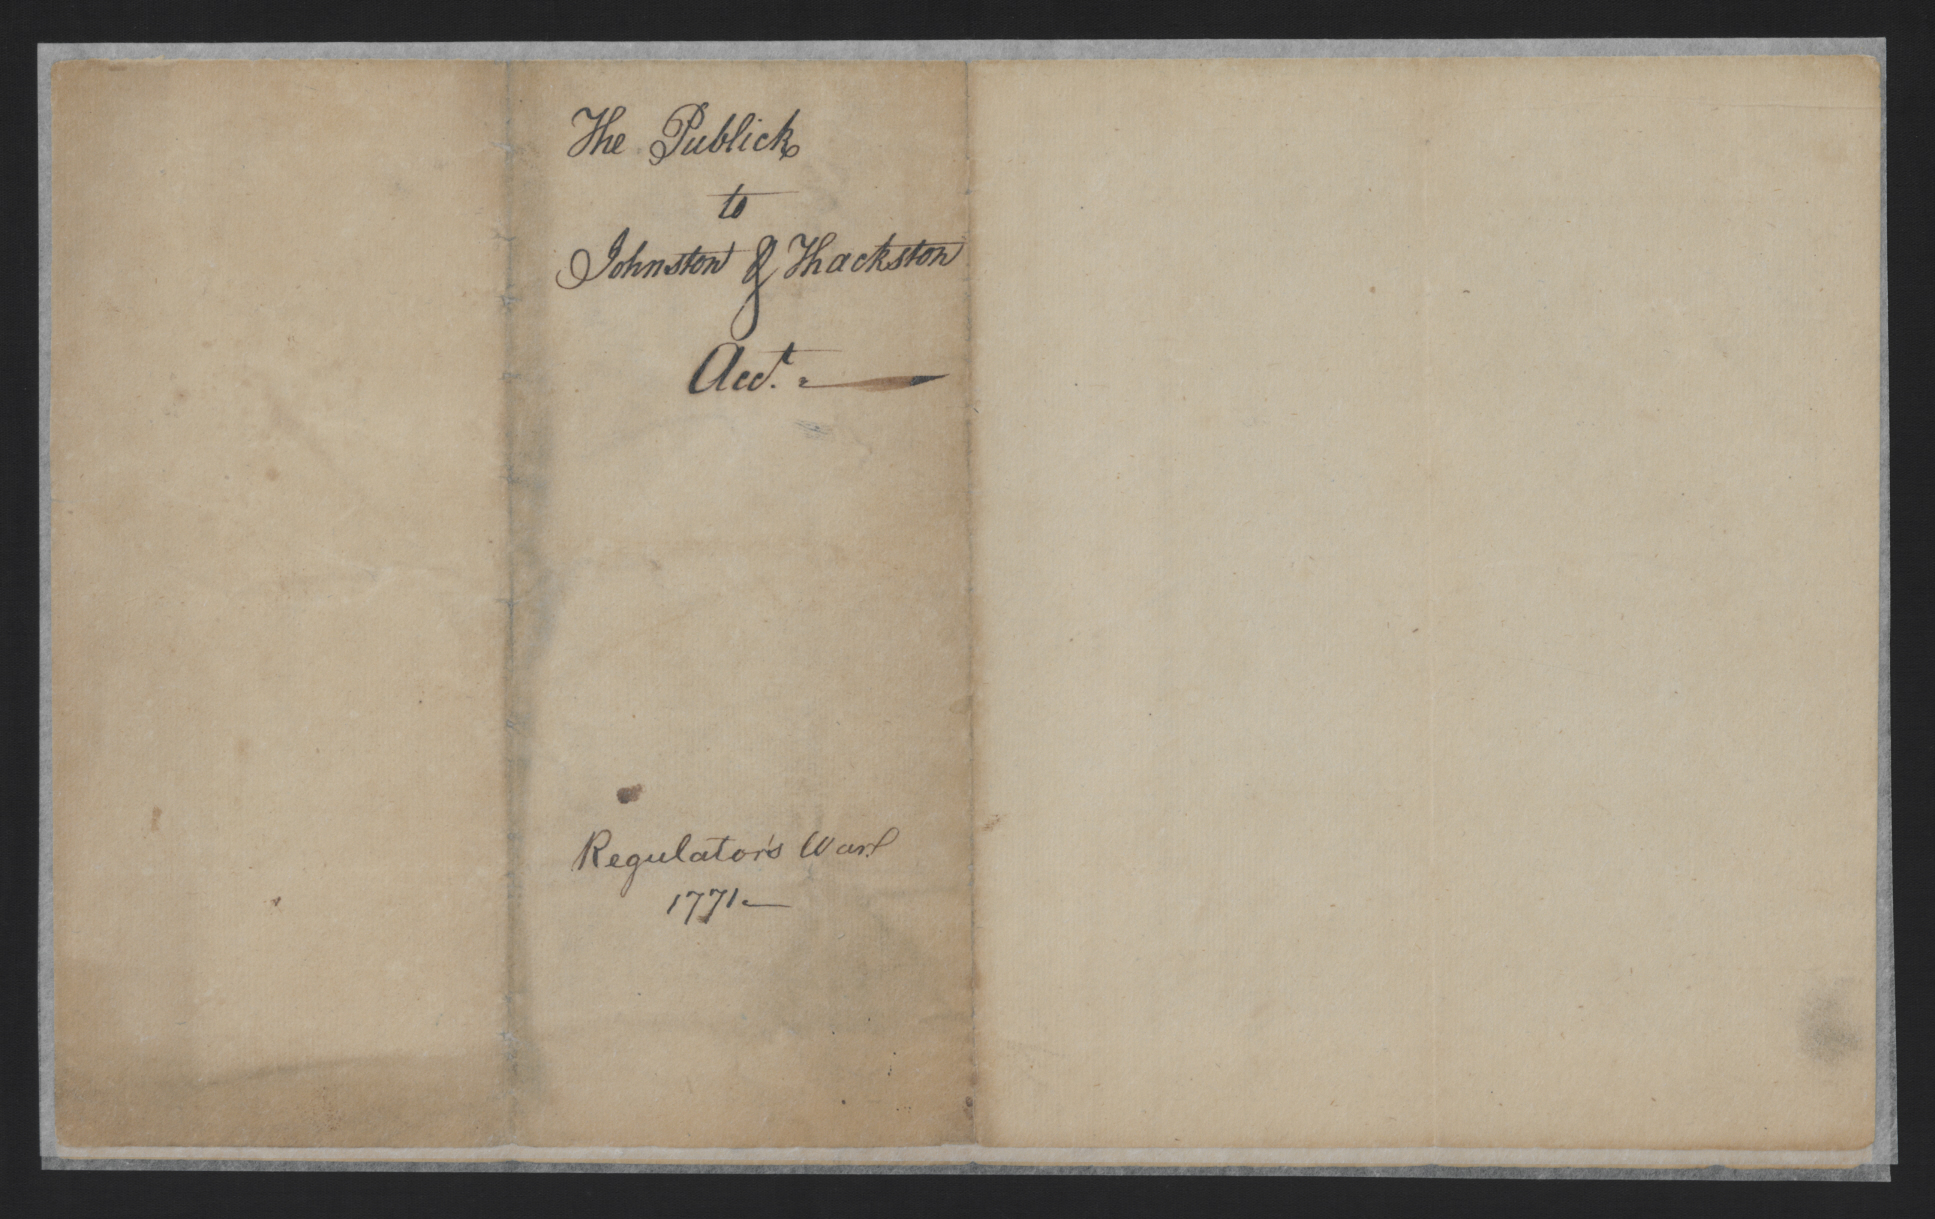 Bill from Samuel Thackston to Thomas Hart, 14 November 1771, page 2.